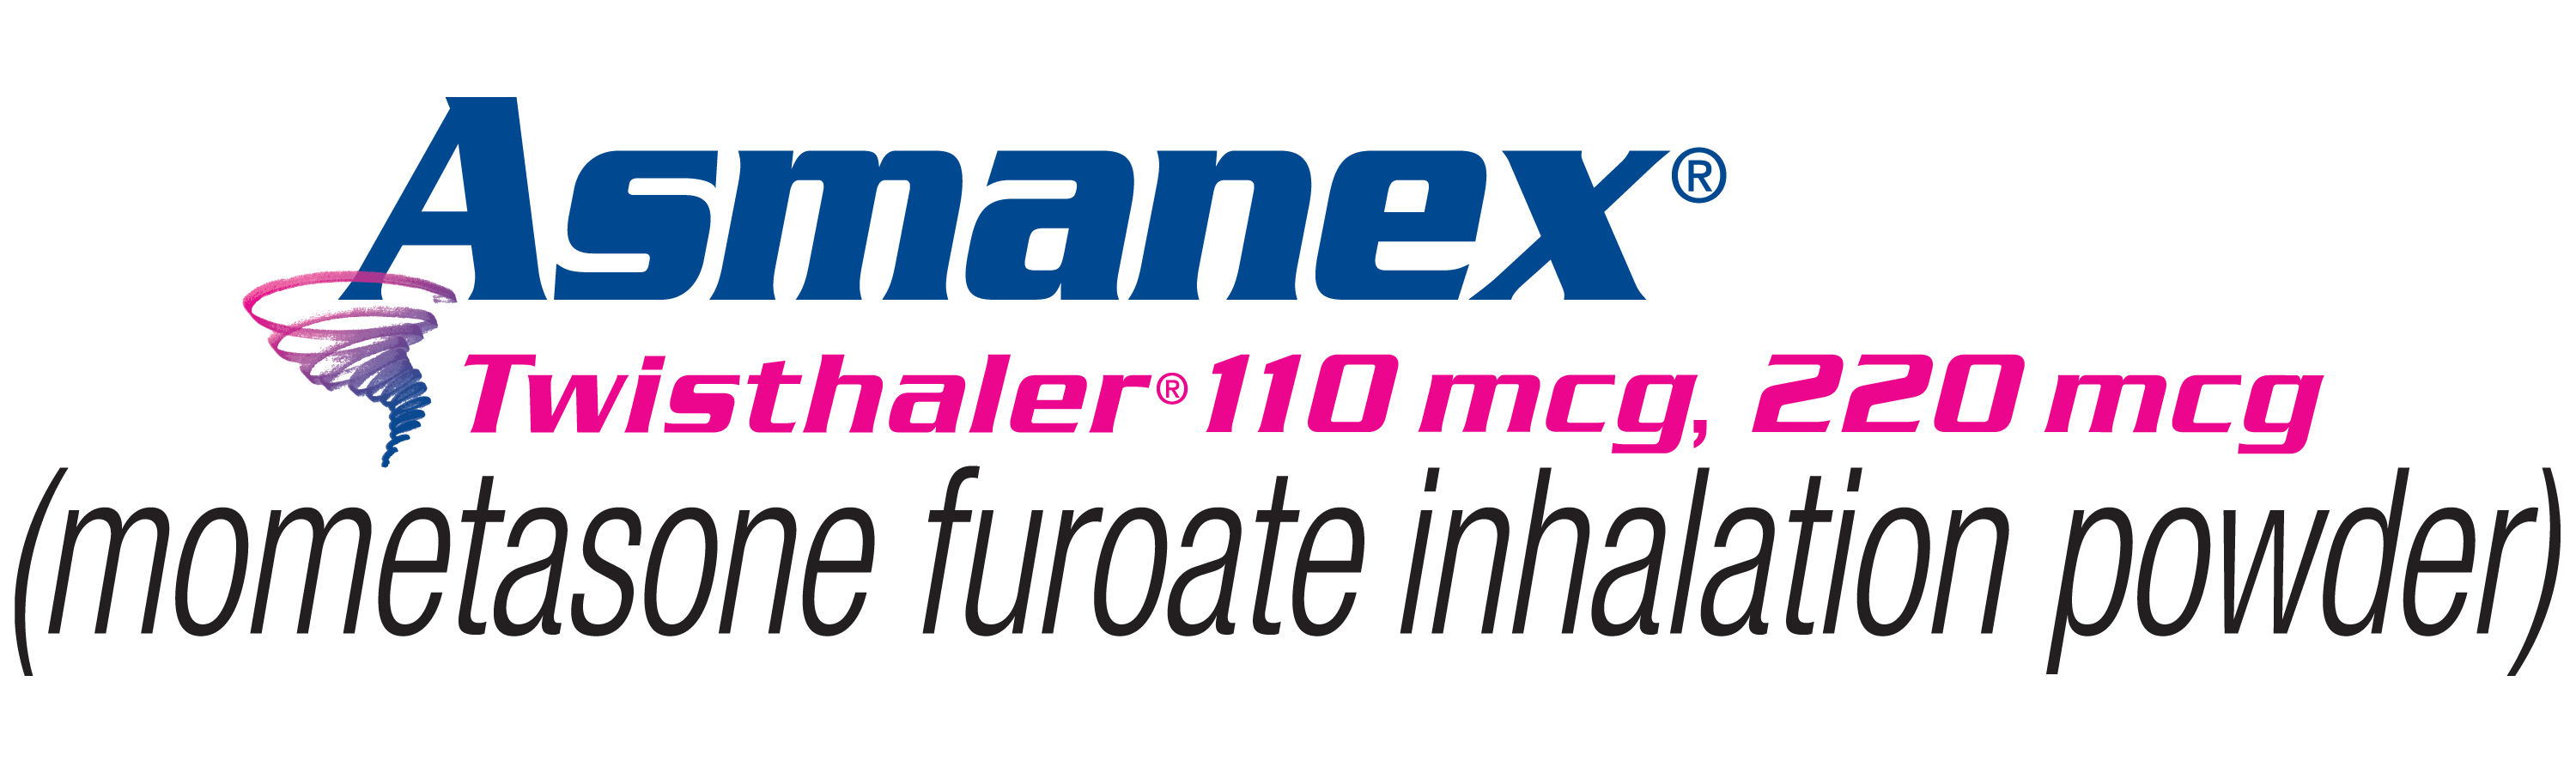 ASMANEX® TWISTHALER® (mometasone furoate inhalation powder) 110 mcg, 220 mcg Logo